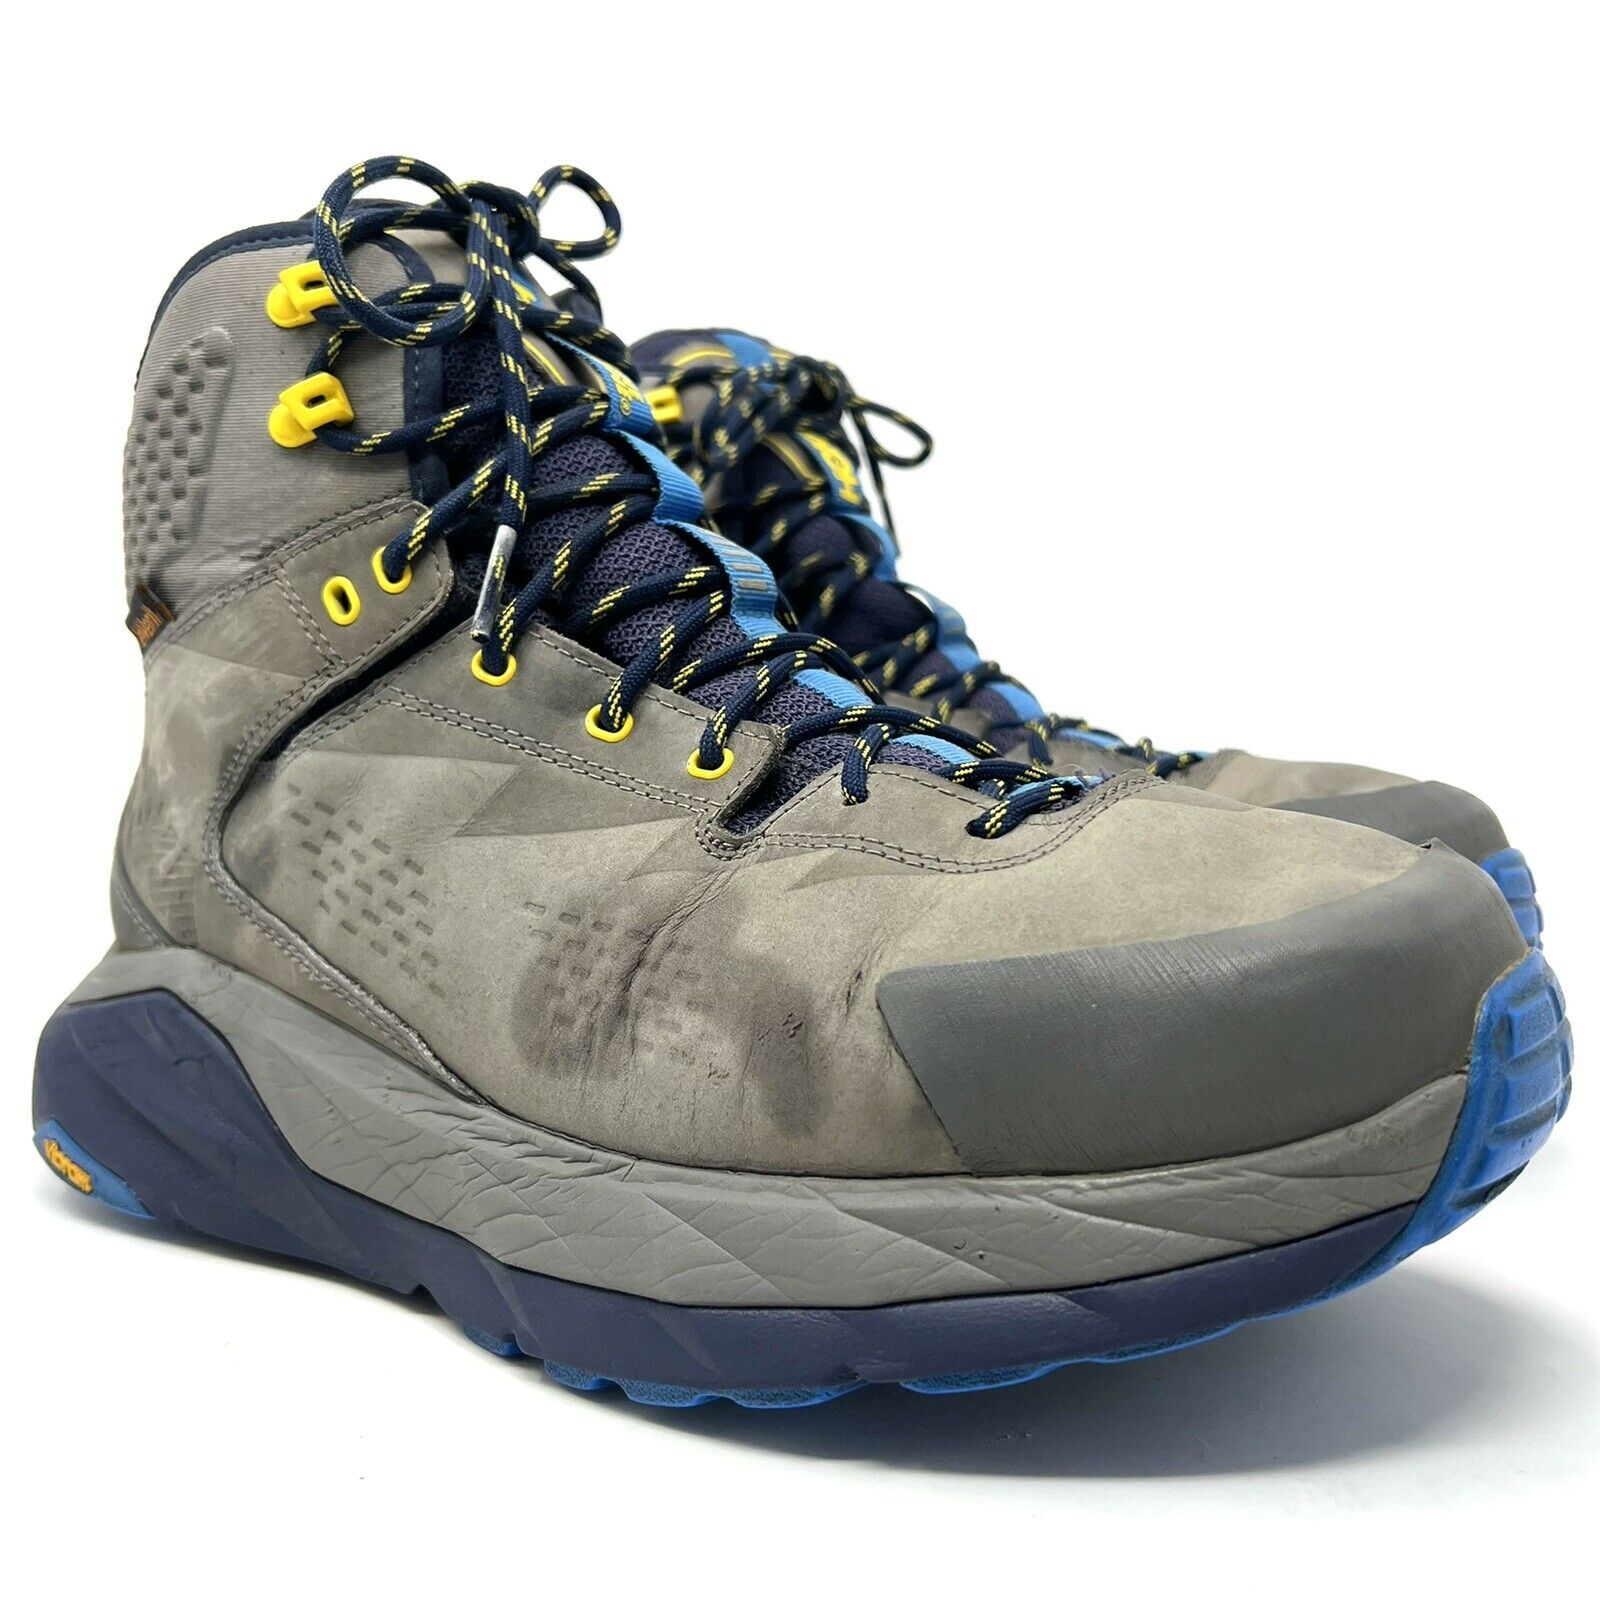 Hoka One One Sky Kaha Event Men’s Size 10 Athletic Waterproof Hiking Boots